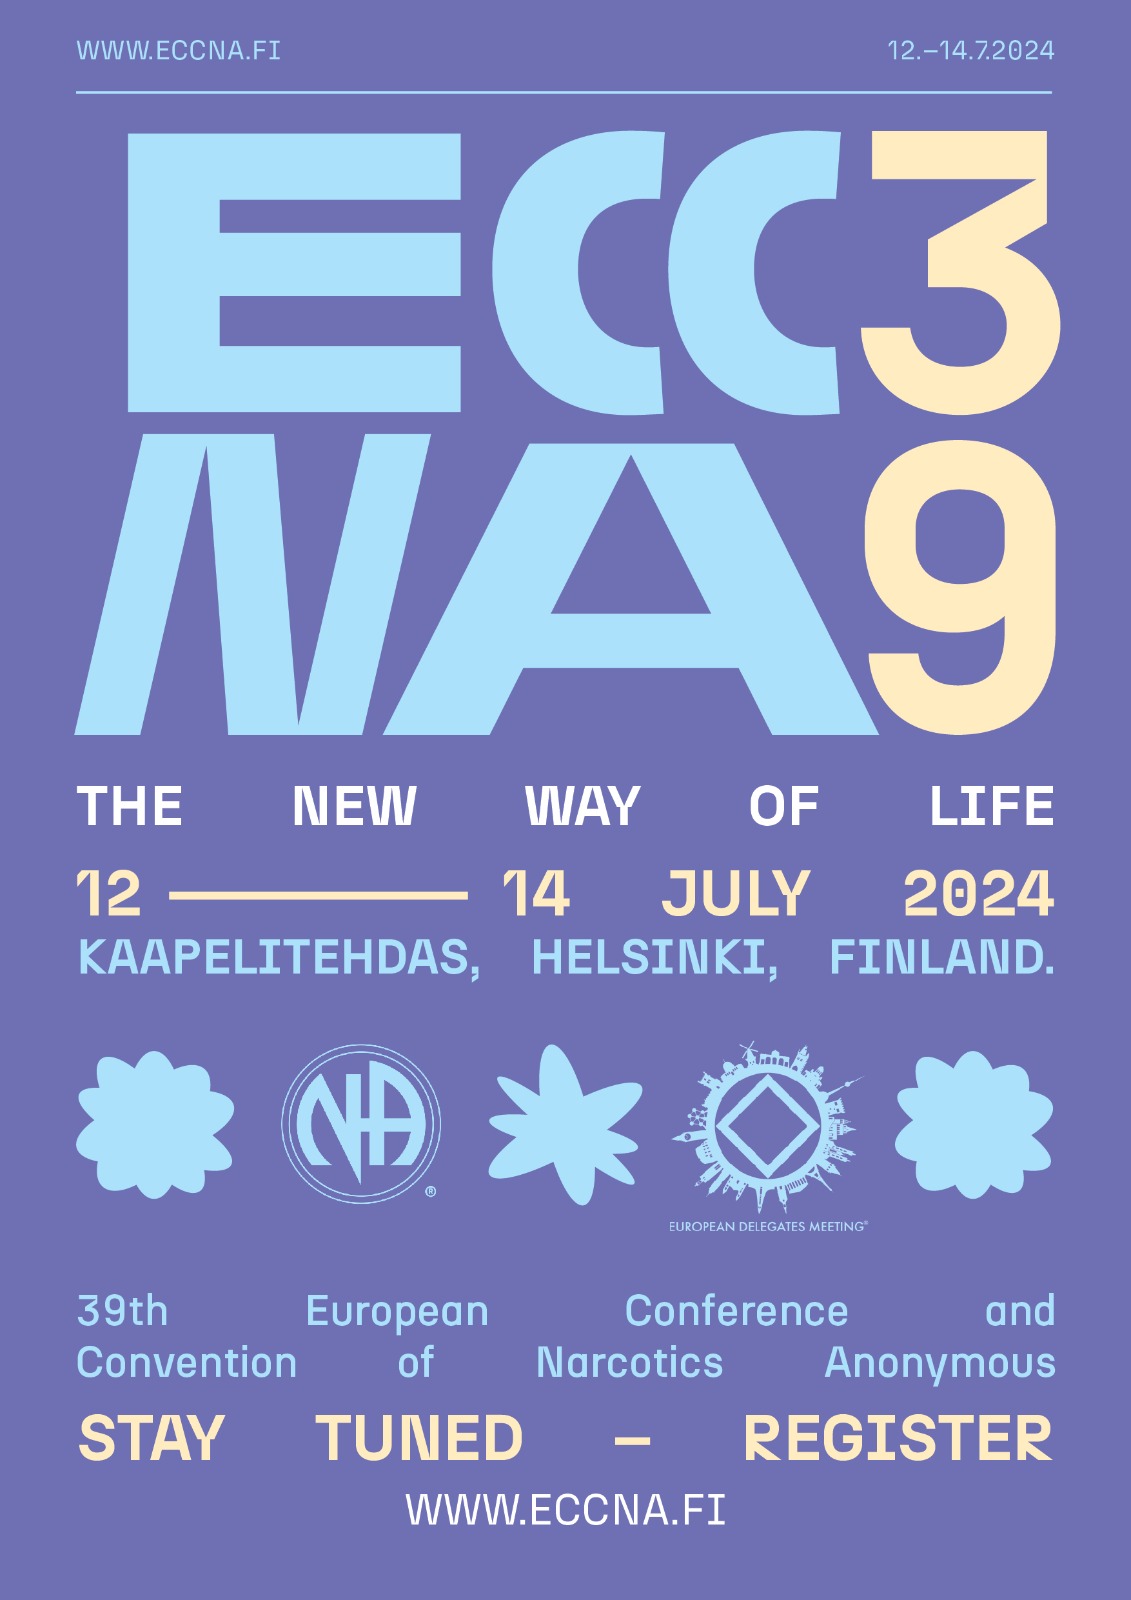 39o Πανευρωπαϊκό συνέδριο των Ναρκομανών Ανωνύμων "THE NEW WAY OF LIFE" (ECCNA 39)